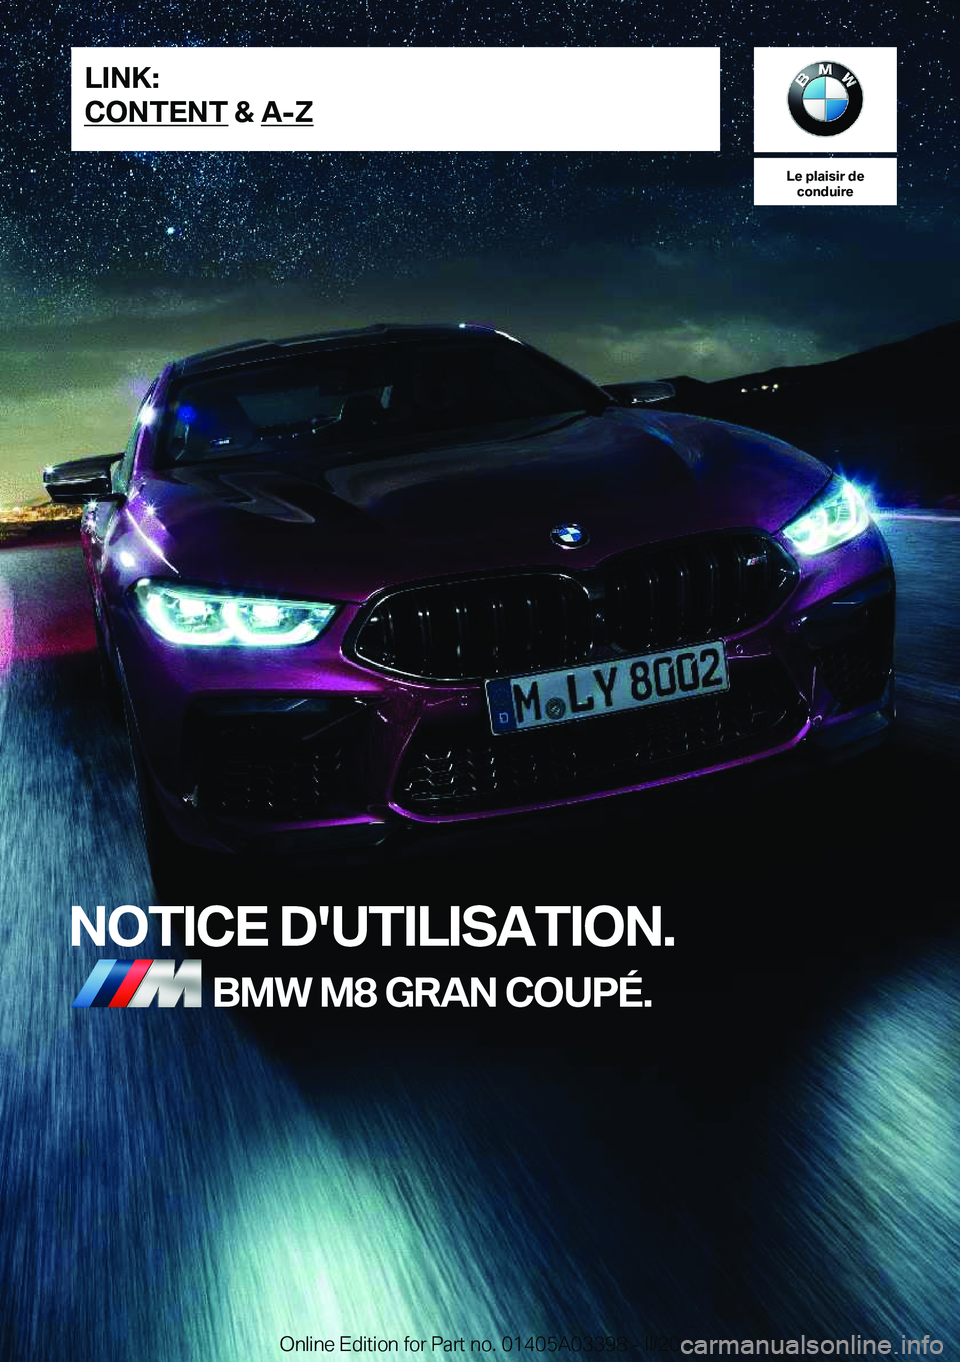 BMW M8 GRAN COUPE 2020  Notices Demploi (in French) �L�e��p�l�a�i�s�i�r��d�e�c�o�n�d�u�i�r�e
�N�O�T�I�C�E��D�'�U�T�I�L�I�S�A�T�I�O�N�.�B�M�W��M�8��G�R�A�N��C�O�U�P�